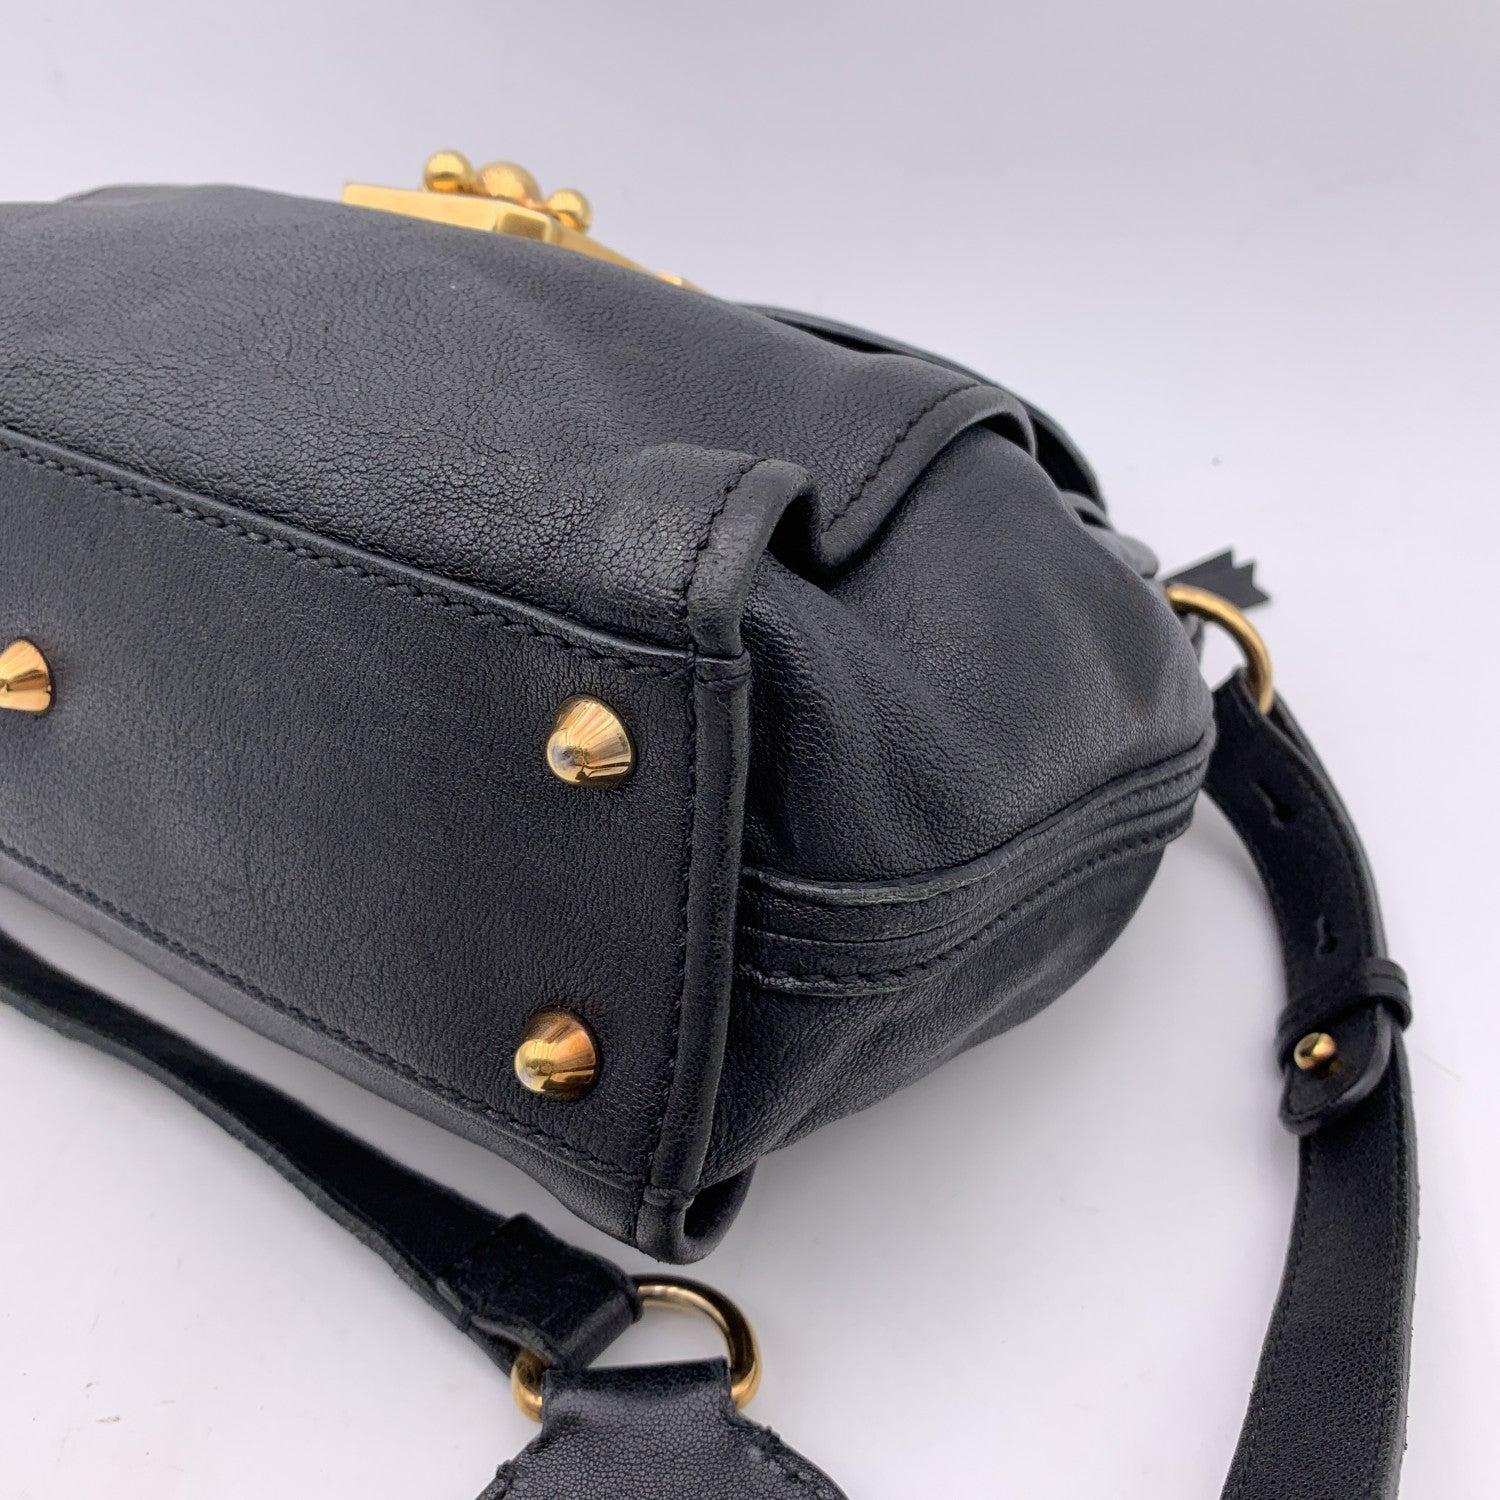 Chloe Black Leather Elsie Bag Tote Satchel Handbag with Strap 3